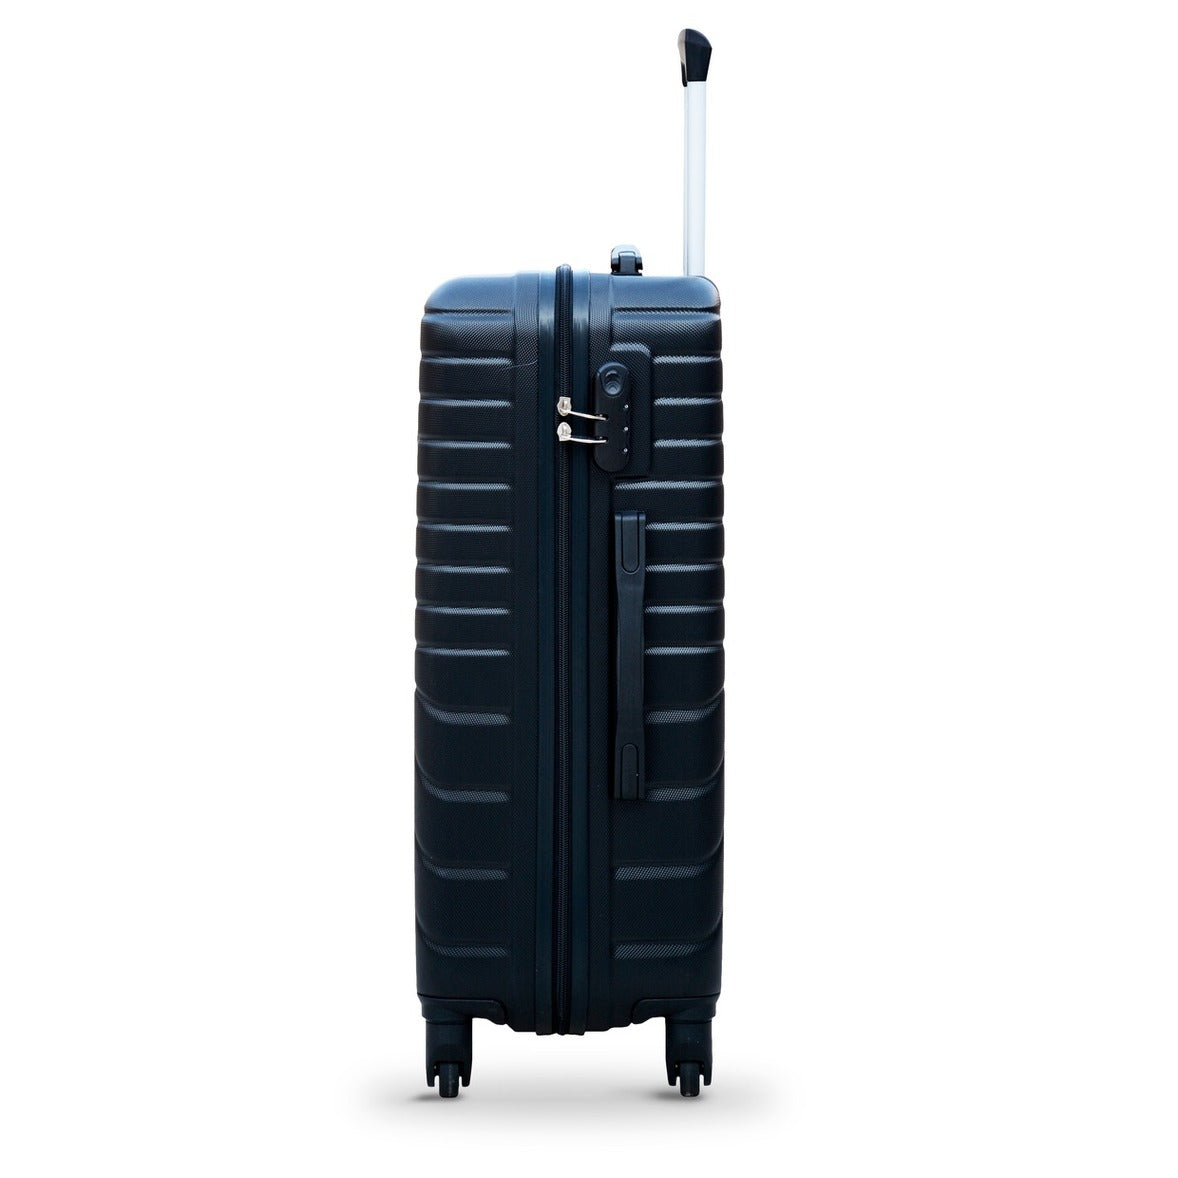 32" Black Colour SJ ABS Luggage Lightweight Hard Case Trolley Bag Zaappy.com